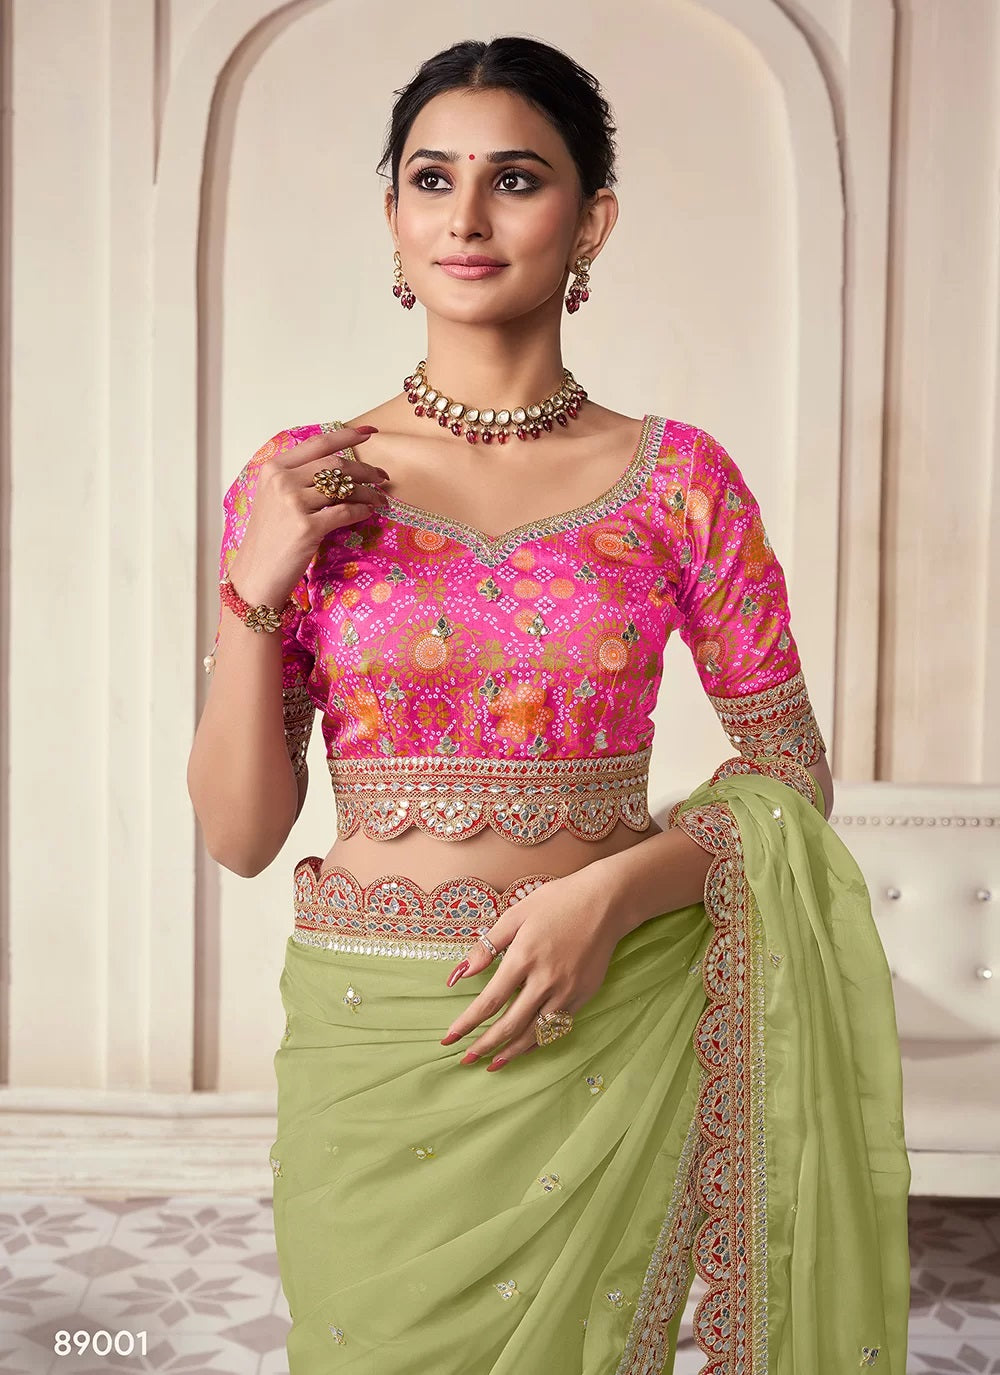 Grandiose Green Organza Embroidered Wedding Indian Saree